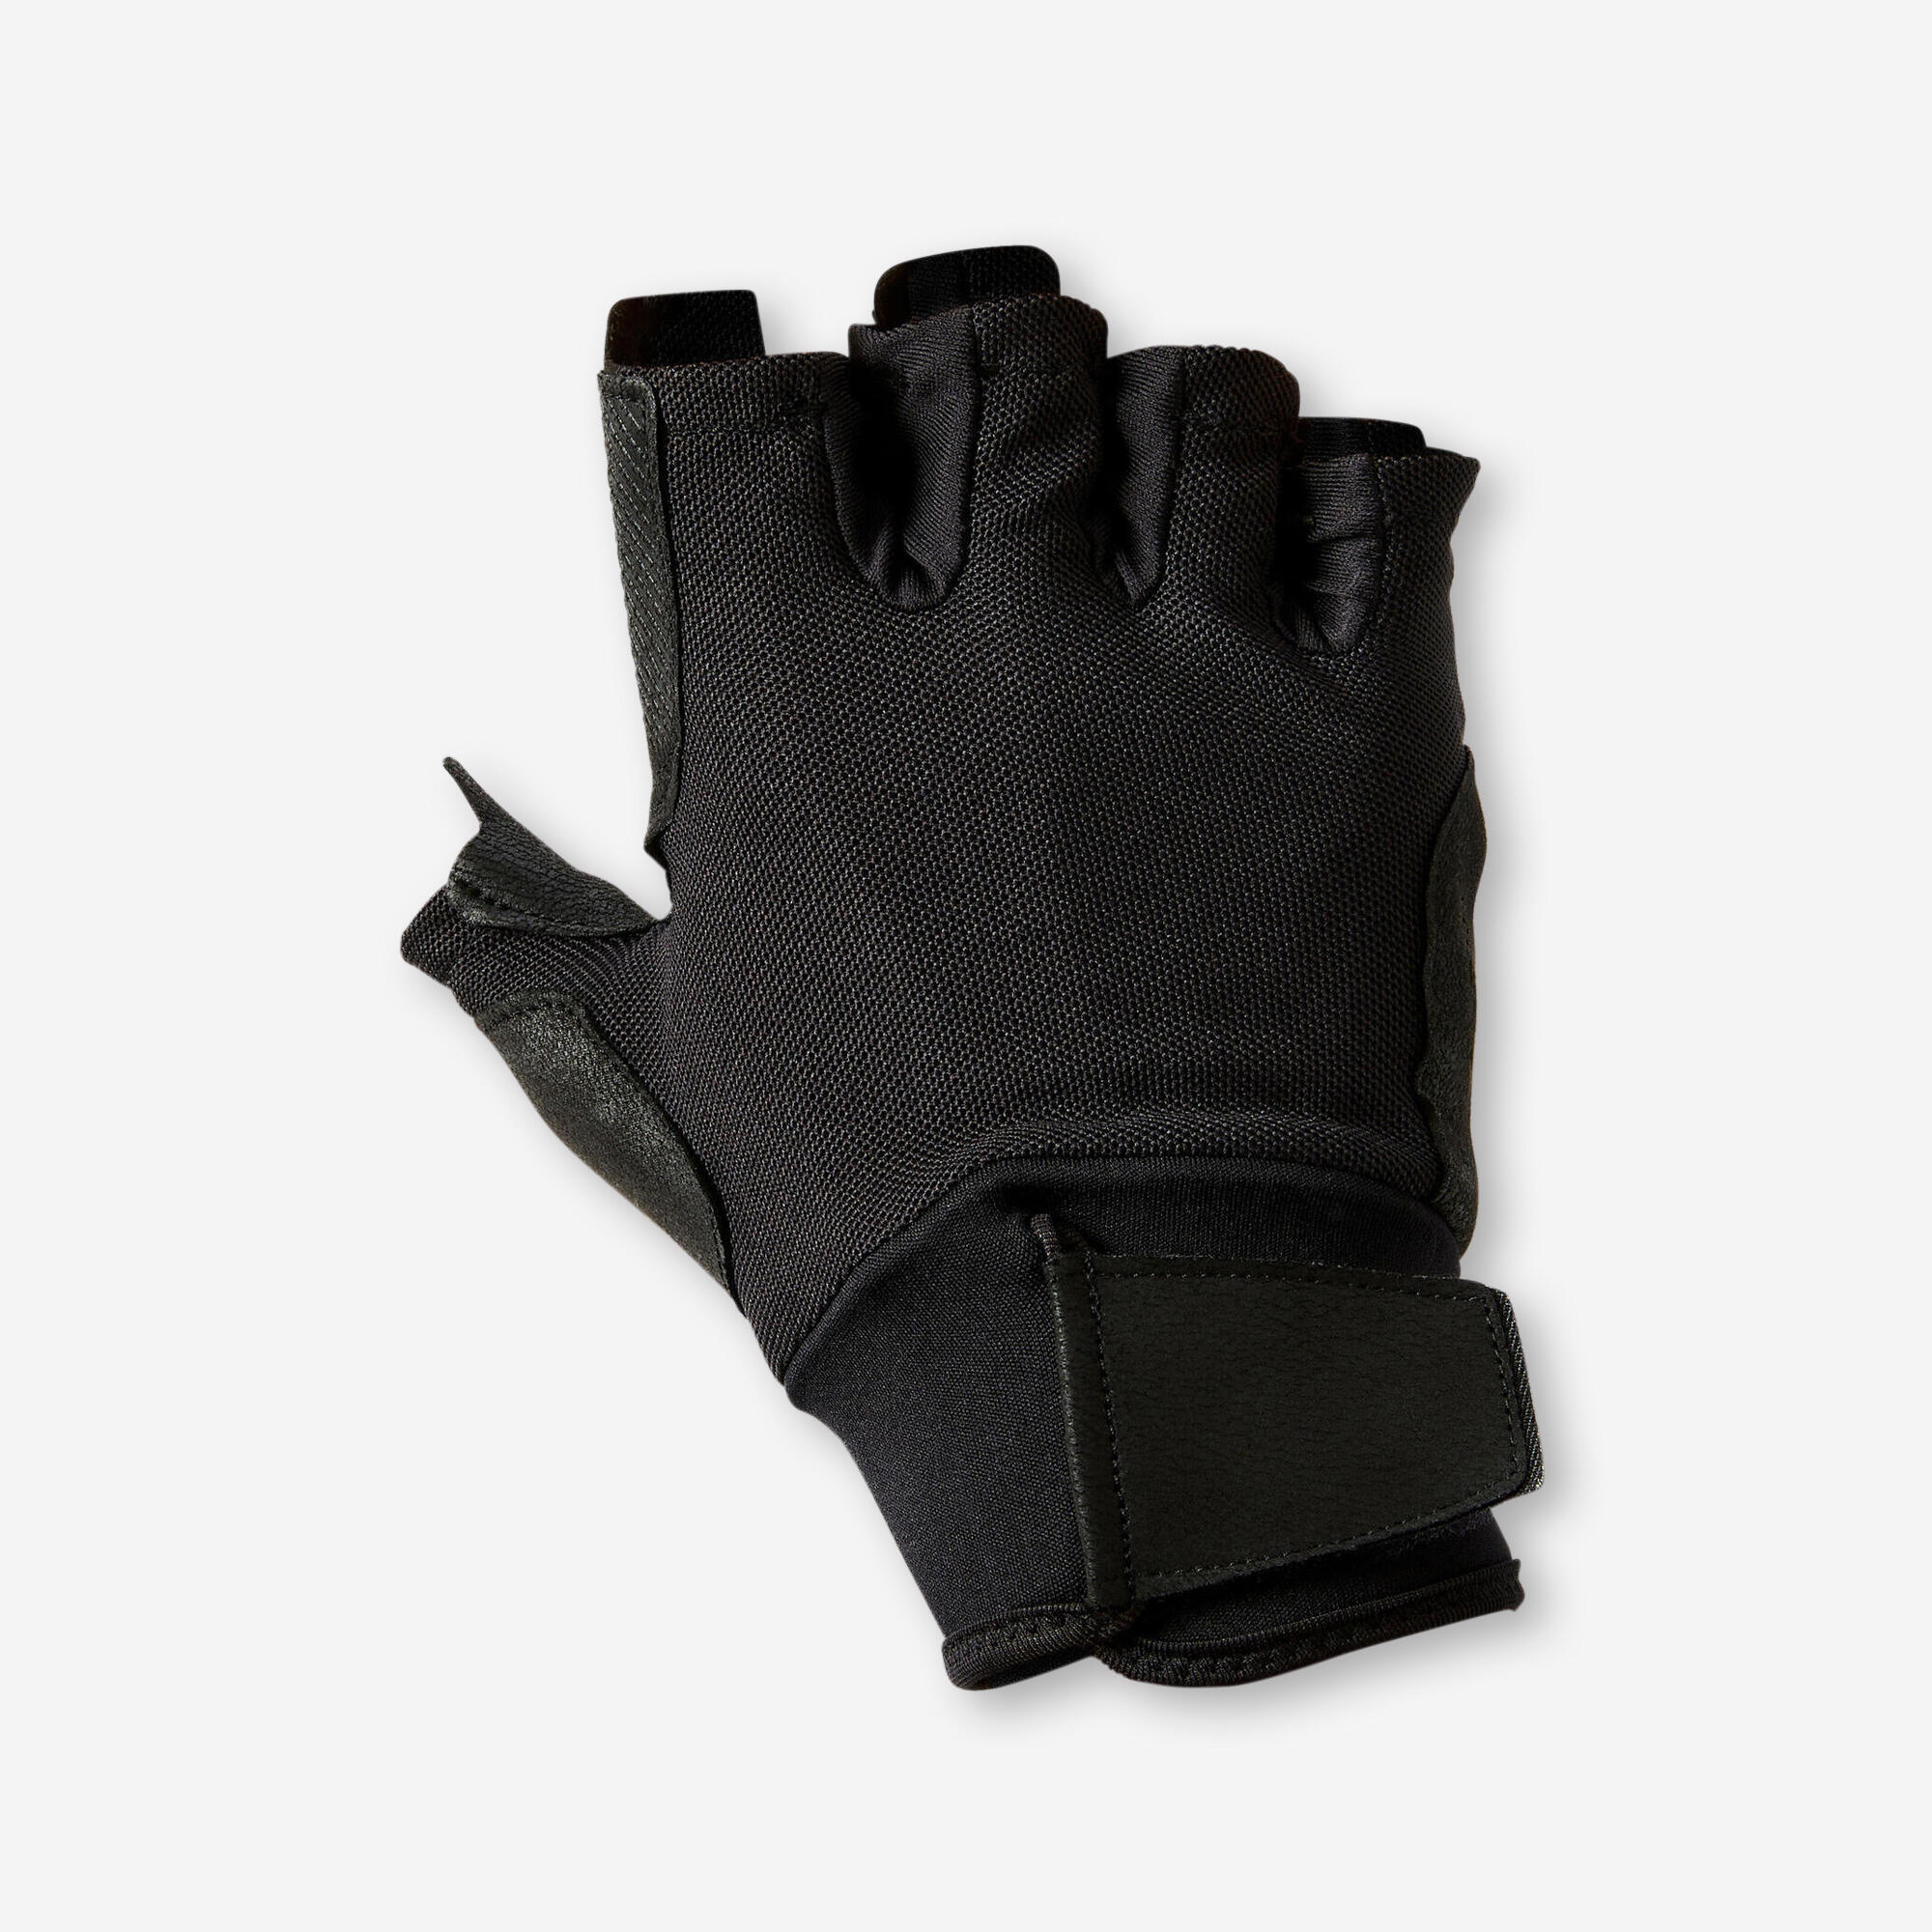 Weight Training Comfort Gloves - Black 1/2